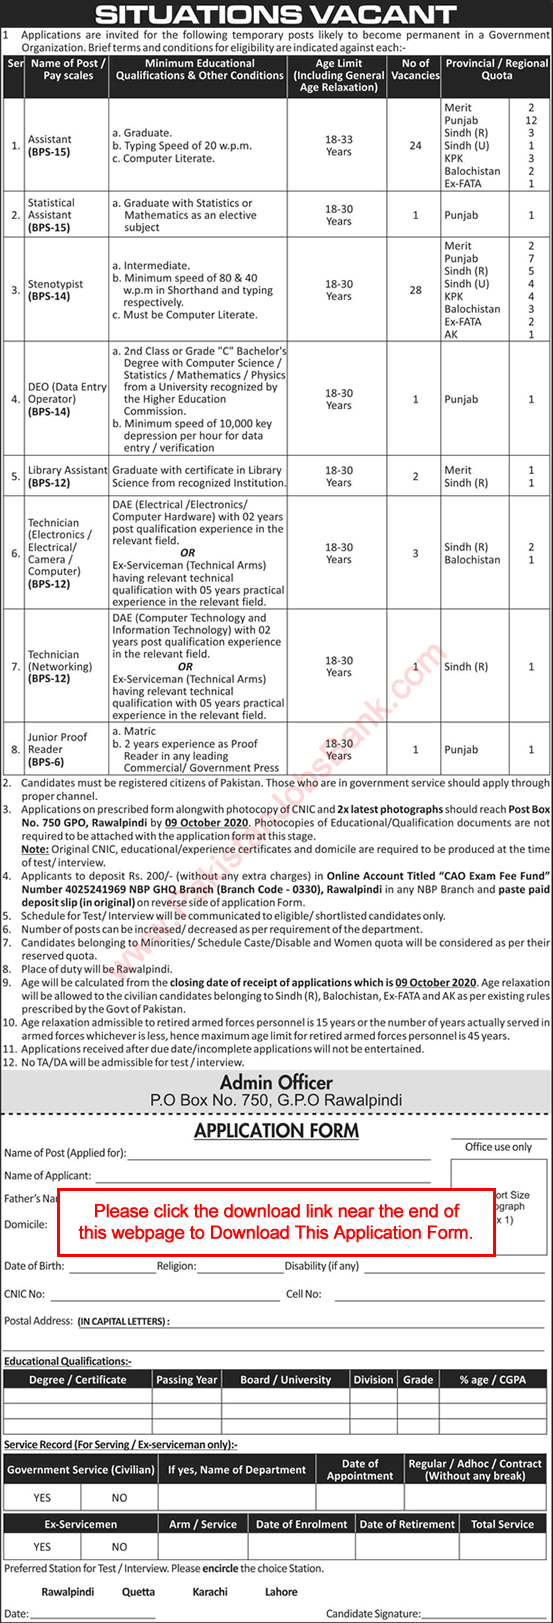 PO Box 750 GPO Rawalpindi Jobs September 2020 Application Form Civilians in GHQ Pakistan Army Latest